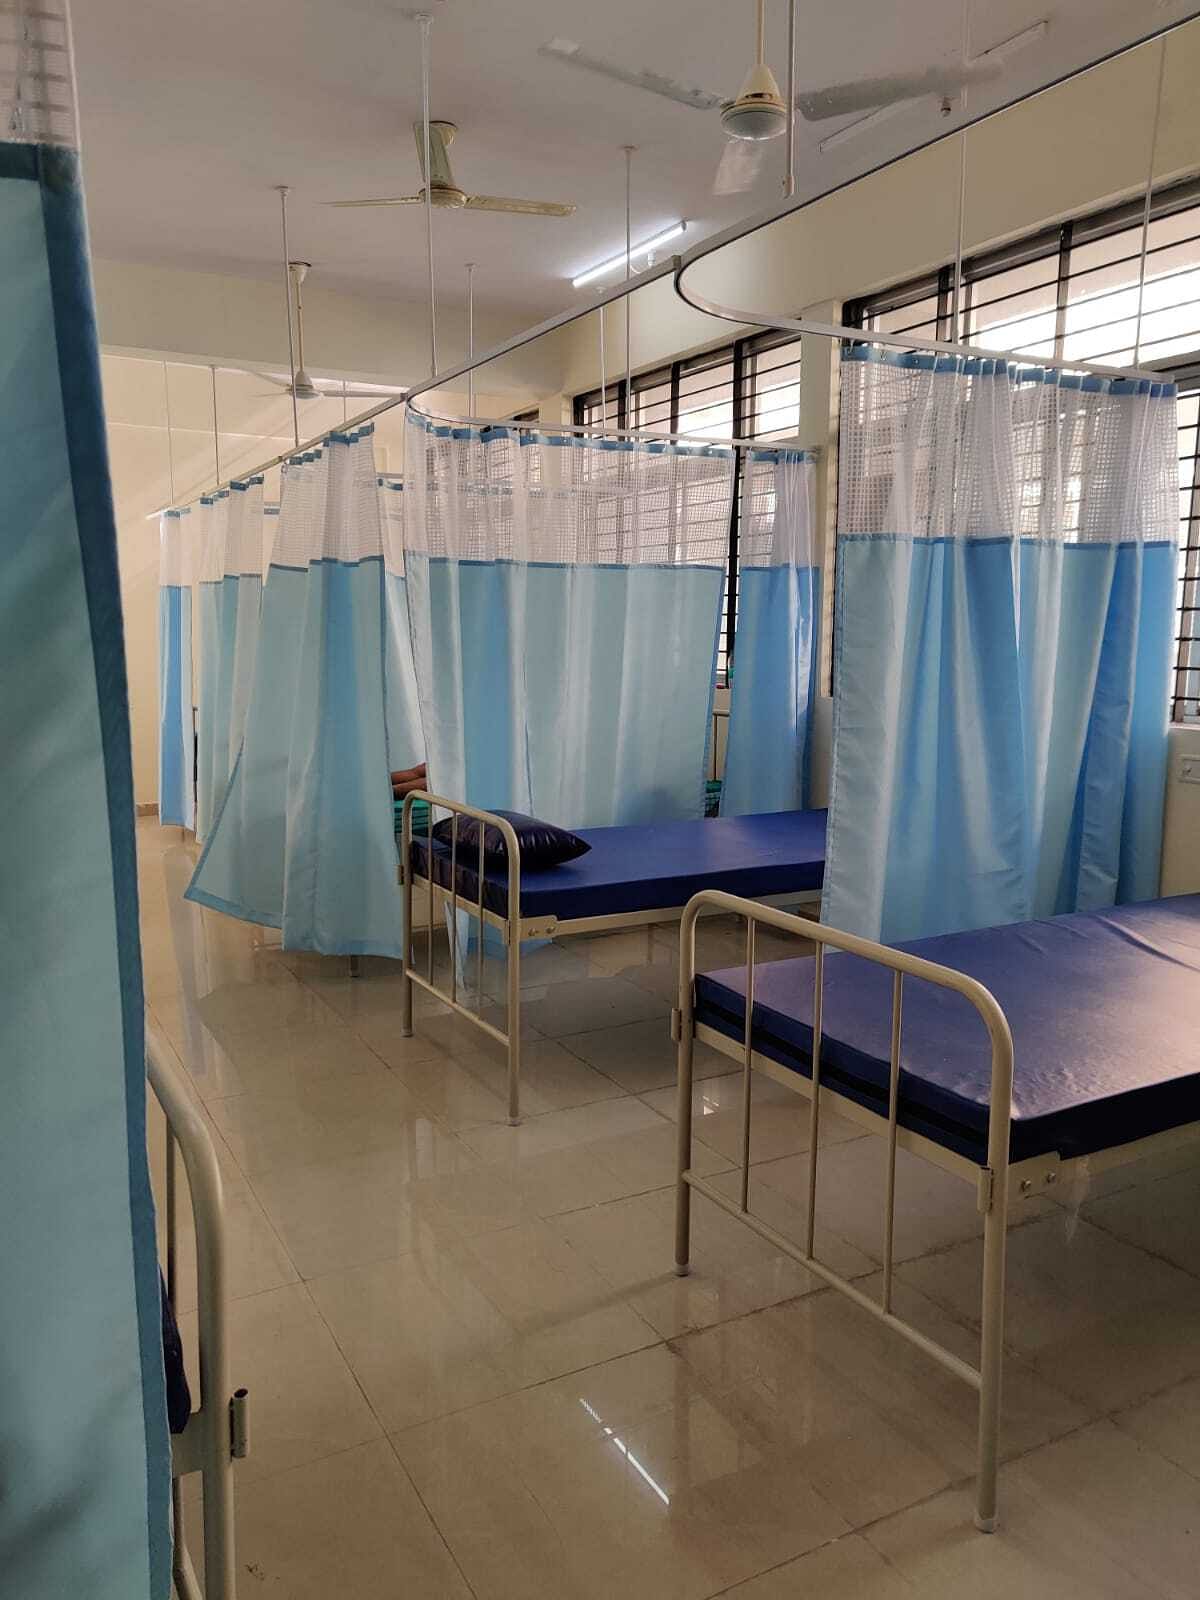 Male ward at the Isolation Hospital, Indiranagar.